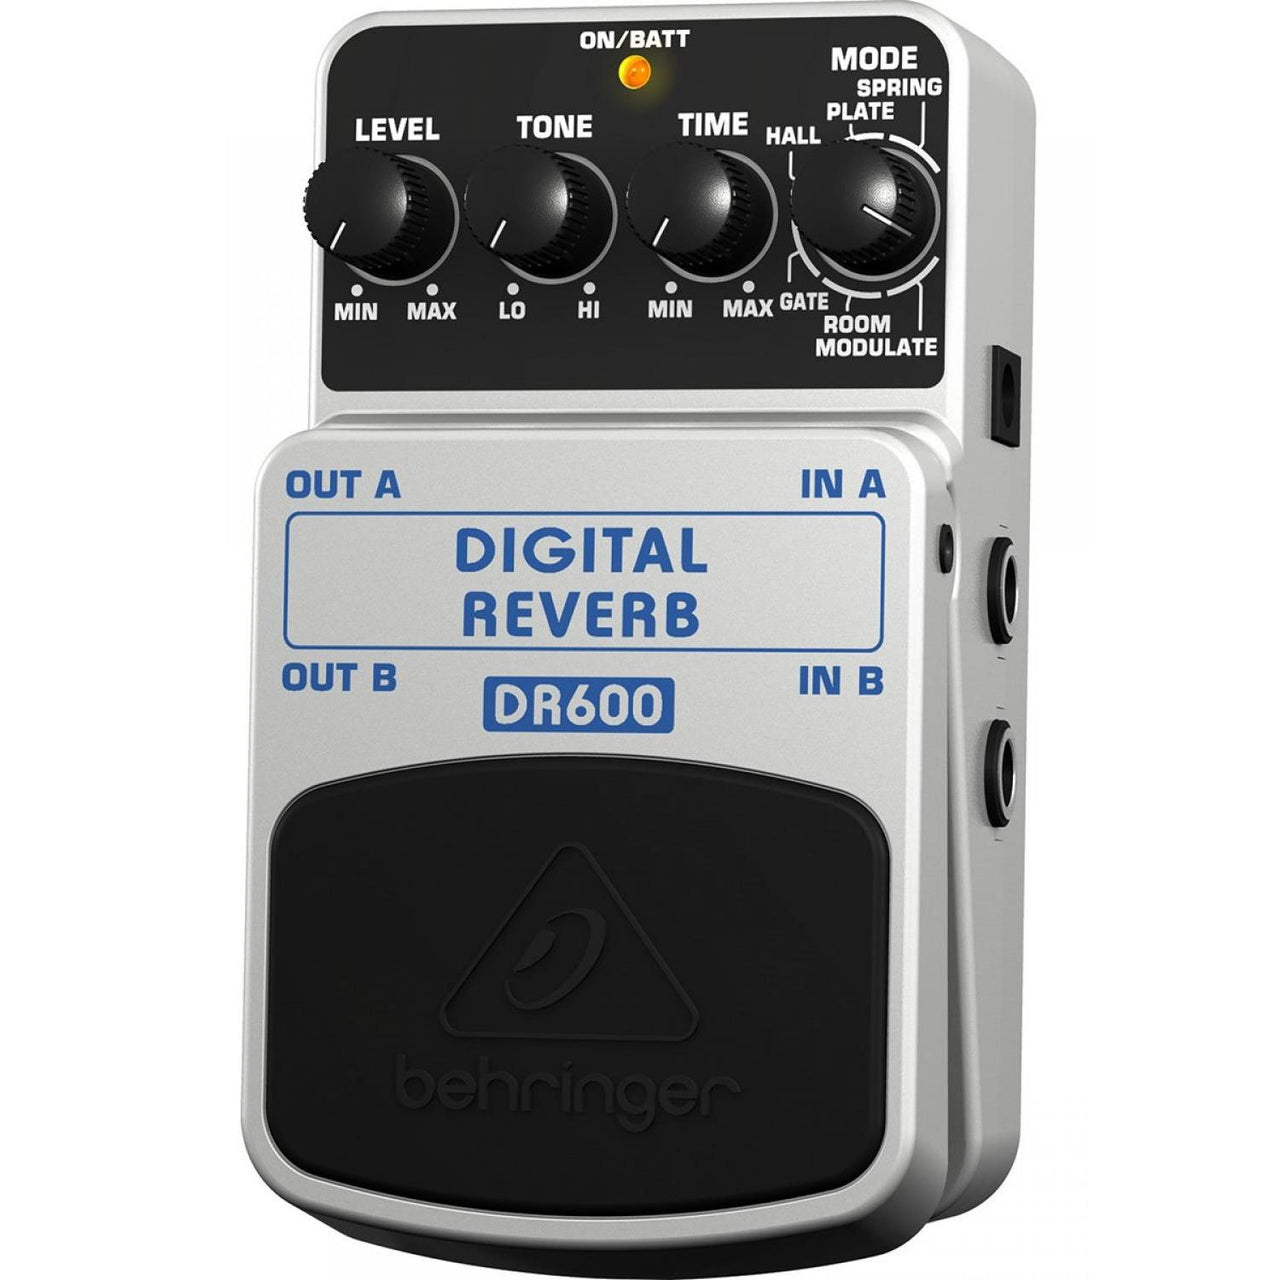 Pedal Behringer Para Guitarra Digital Reverb, Dr600